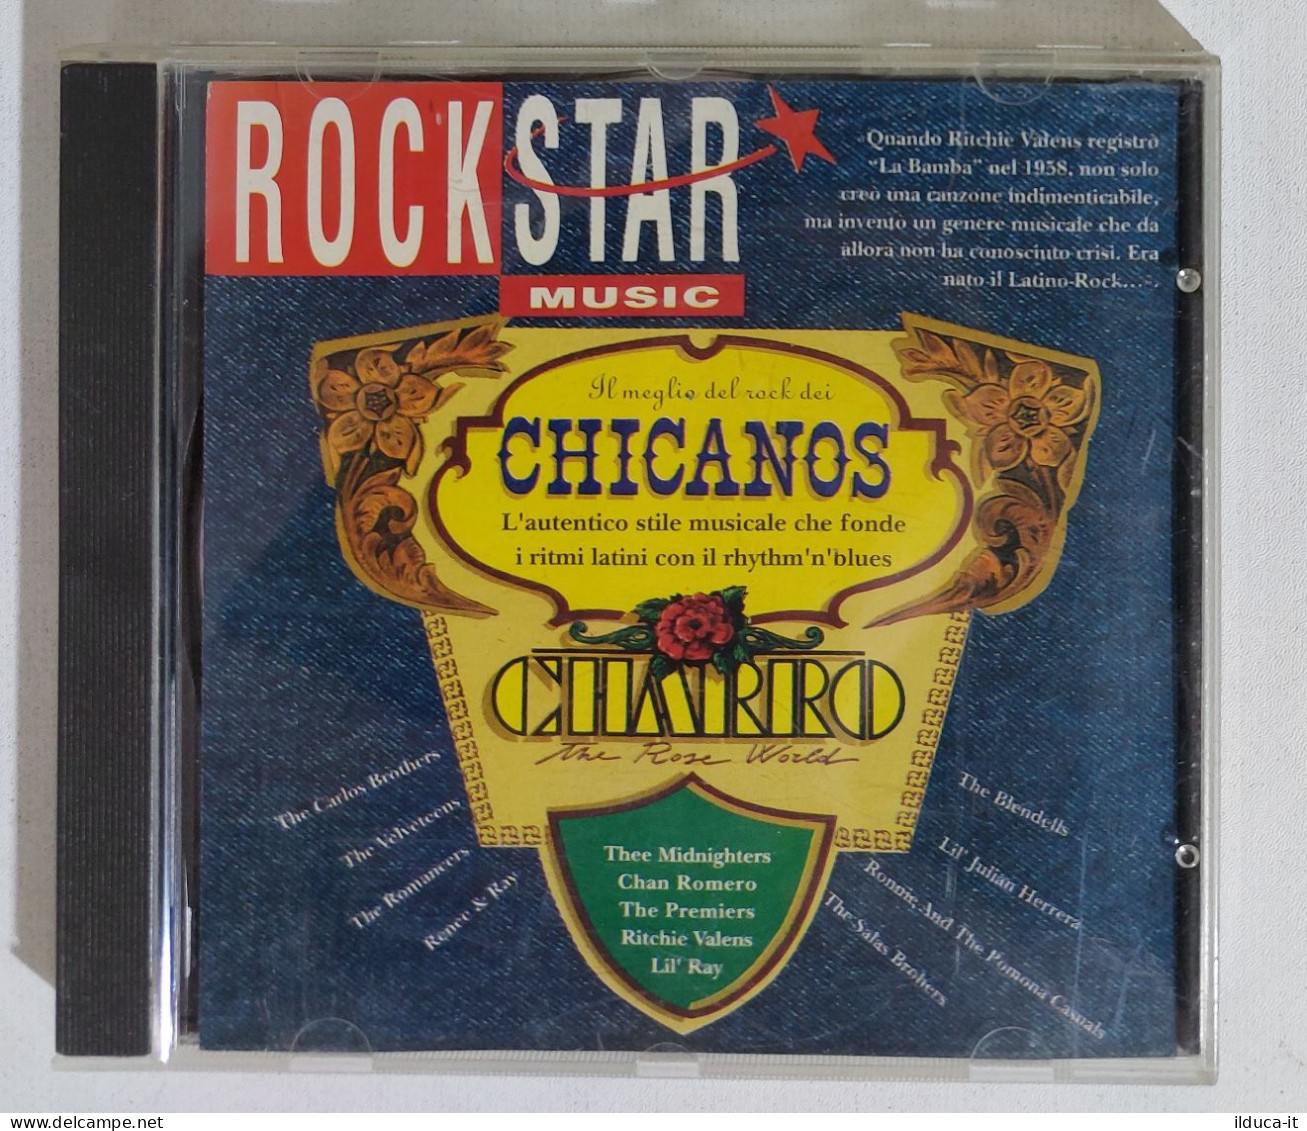 39502 CD - RockStar Music - Chicanos - Compilations